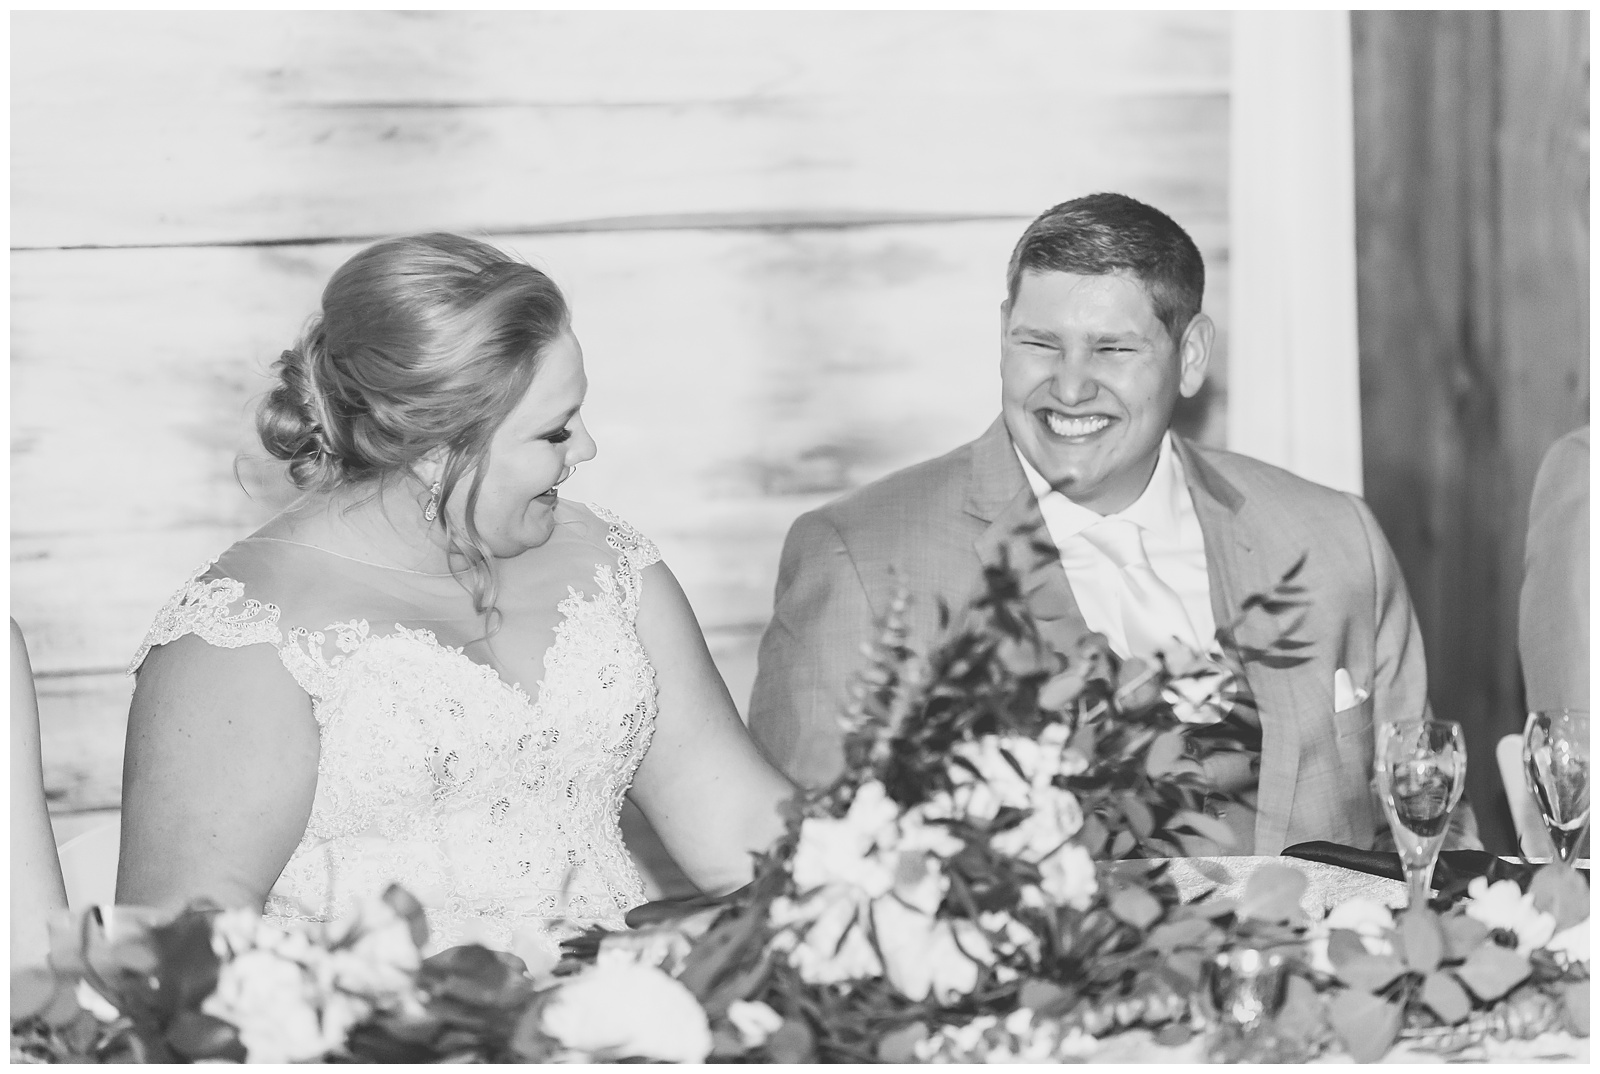 Wedding photography at Mildale Farm in Edgerton, Kansas, by Kansas City wedding photographers Wisdom-Watson Weddings.